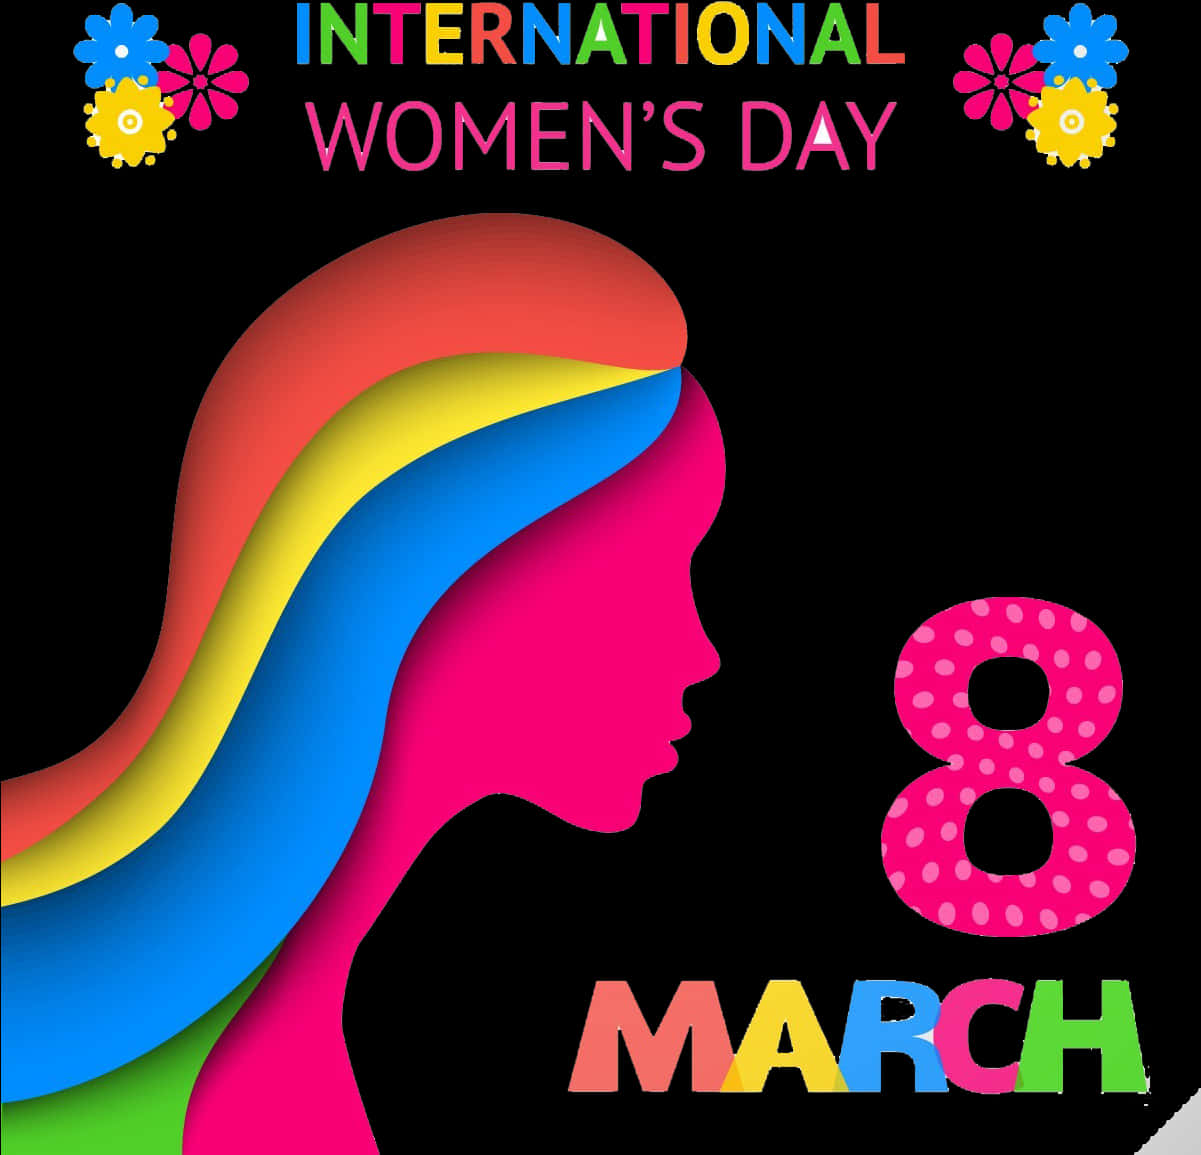 International Womens Day Celebration Graphic